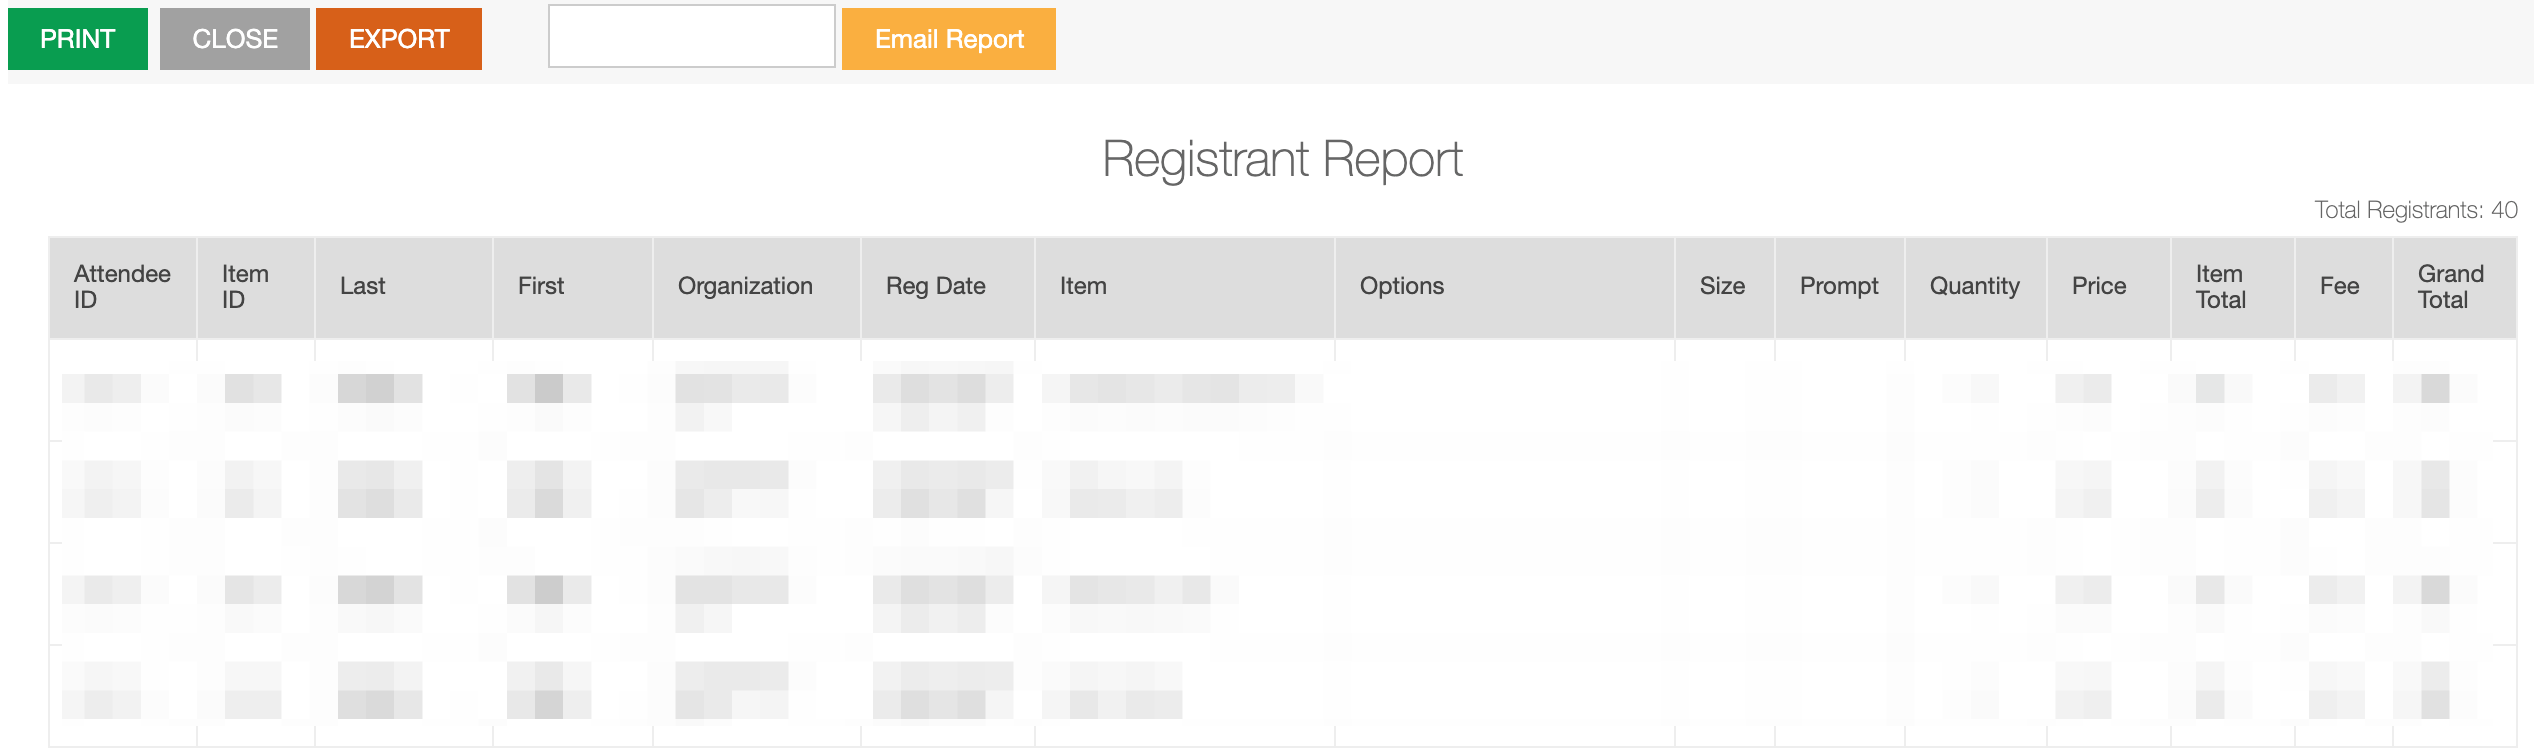 Registrant_Summary_Report.png